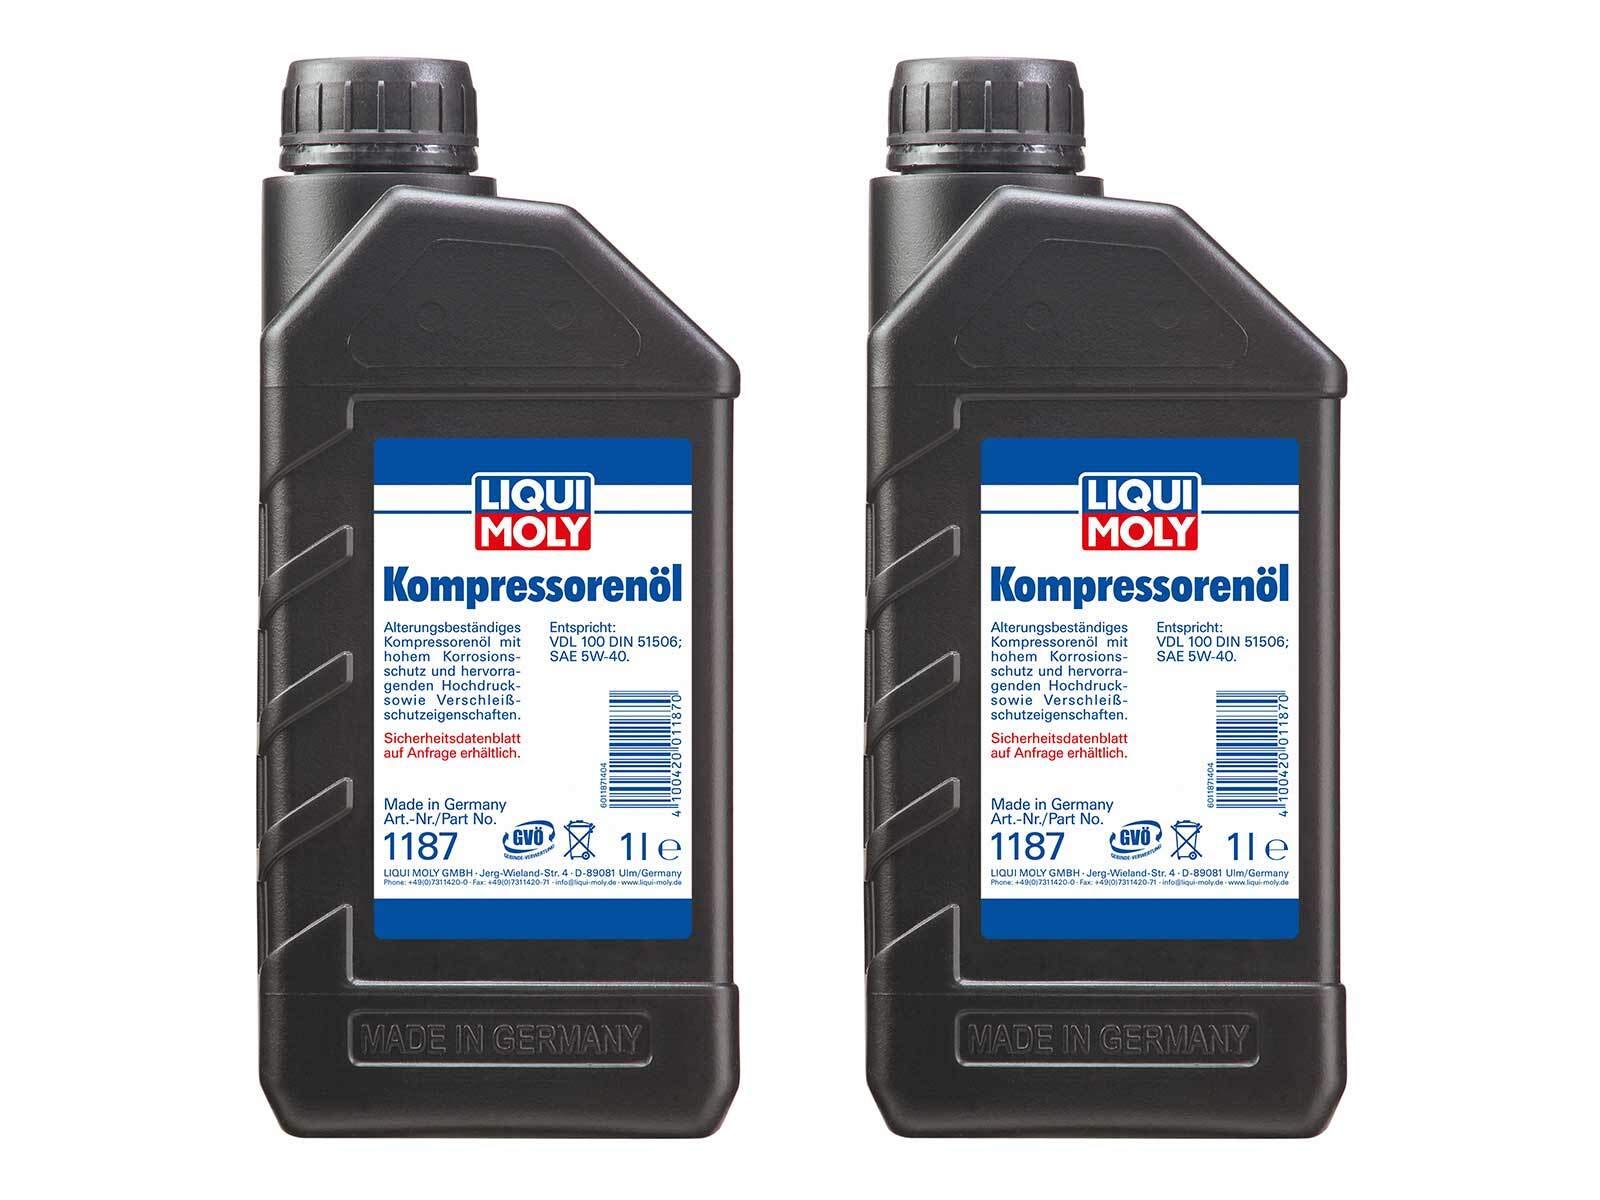 ILODA 2X Original Liqui Moly 1L Kompressorenöl Öl Compressor Oil Schmiersicherheit von ILODA